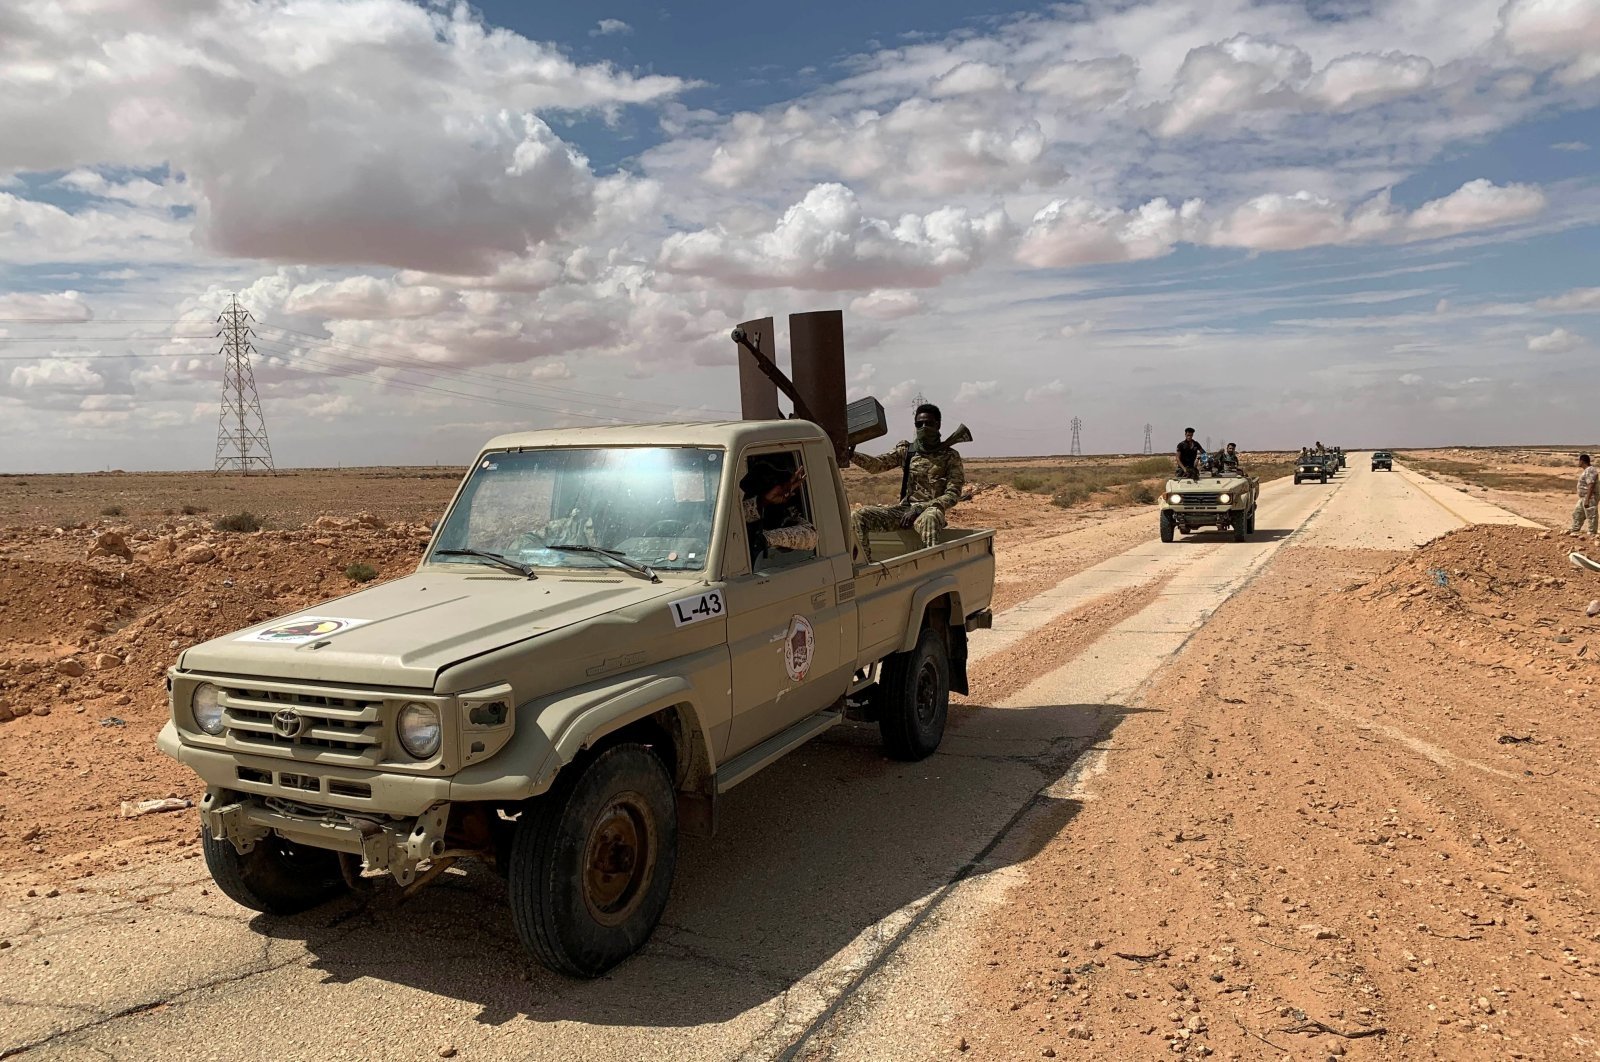 Troops loyal to Libya's internationally recognized government patrol the area in Zamzam, near Abu Qareen, Libya, Sept. 15, 2020. (Reuters Photo)